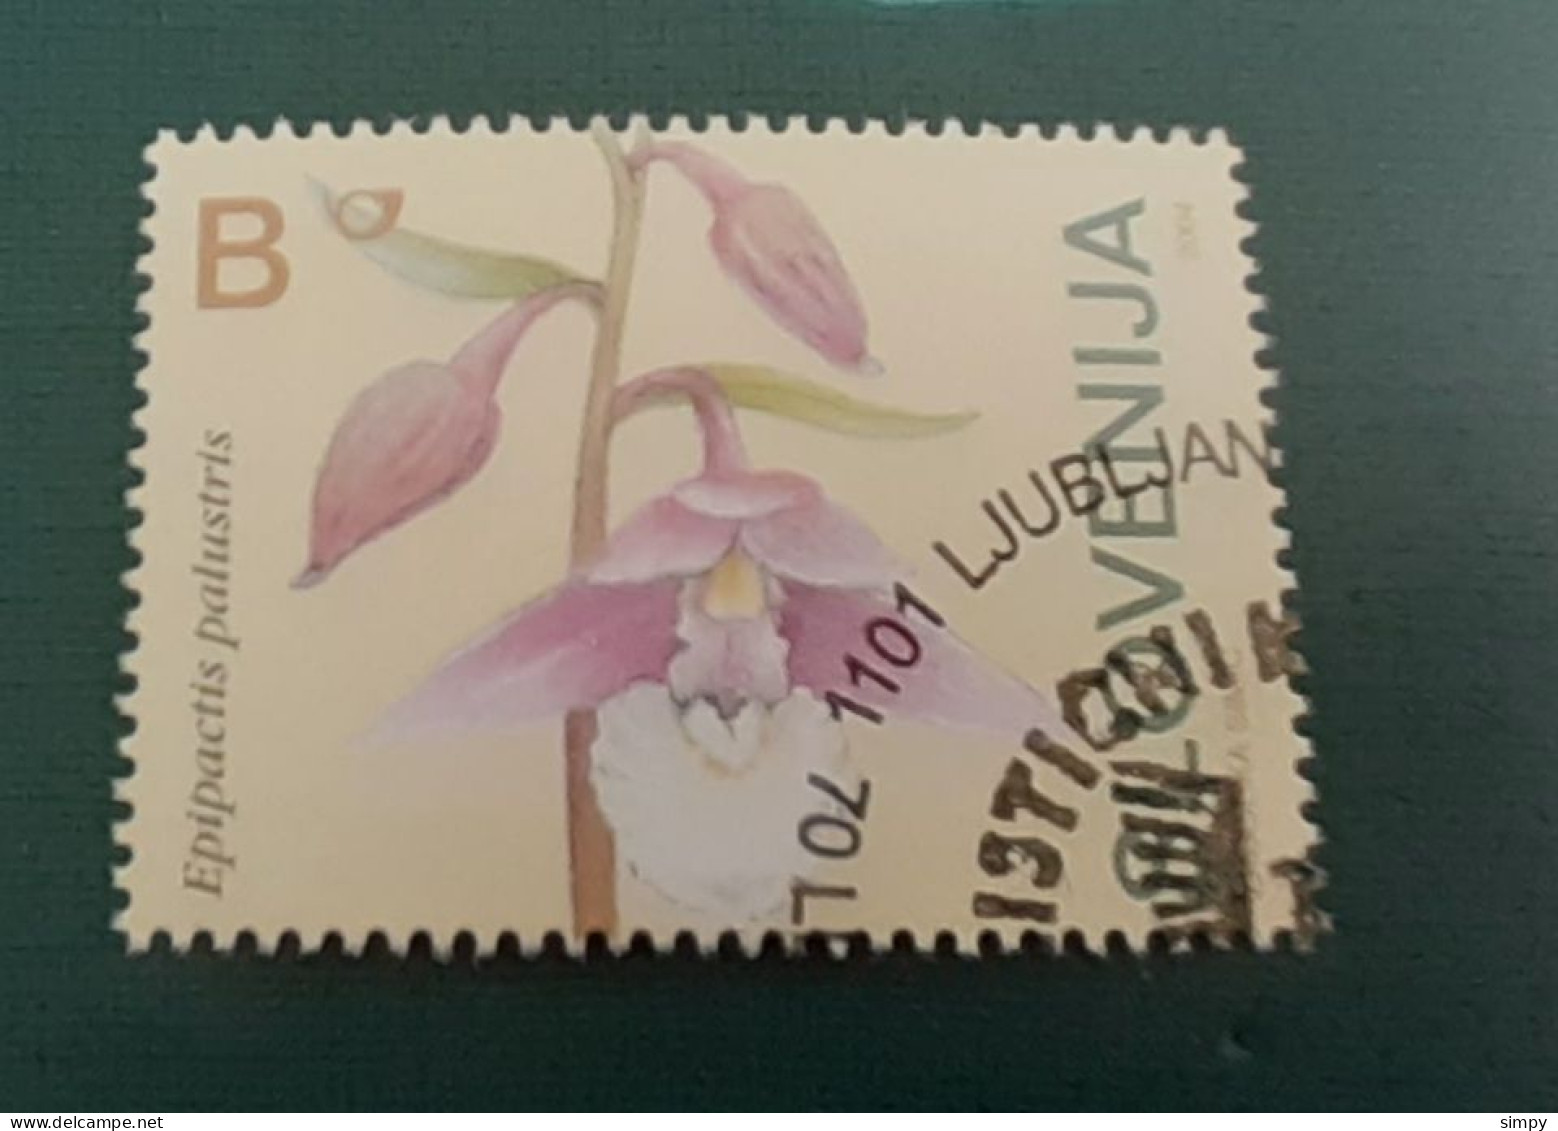 SLOVENIA 2004 Orhids Flowers Michel 483 Used Stamp - Slovenia